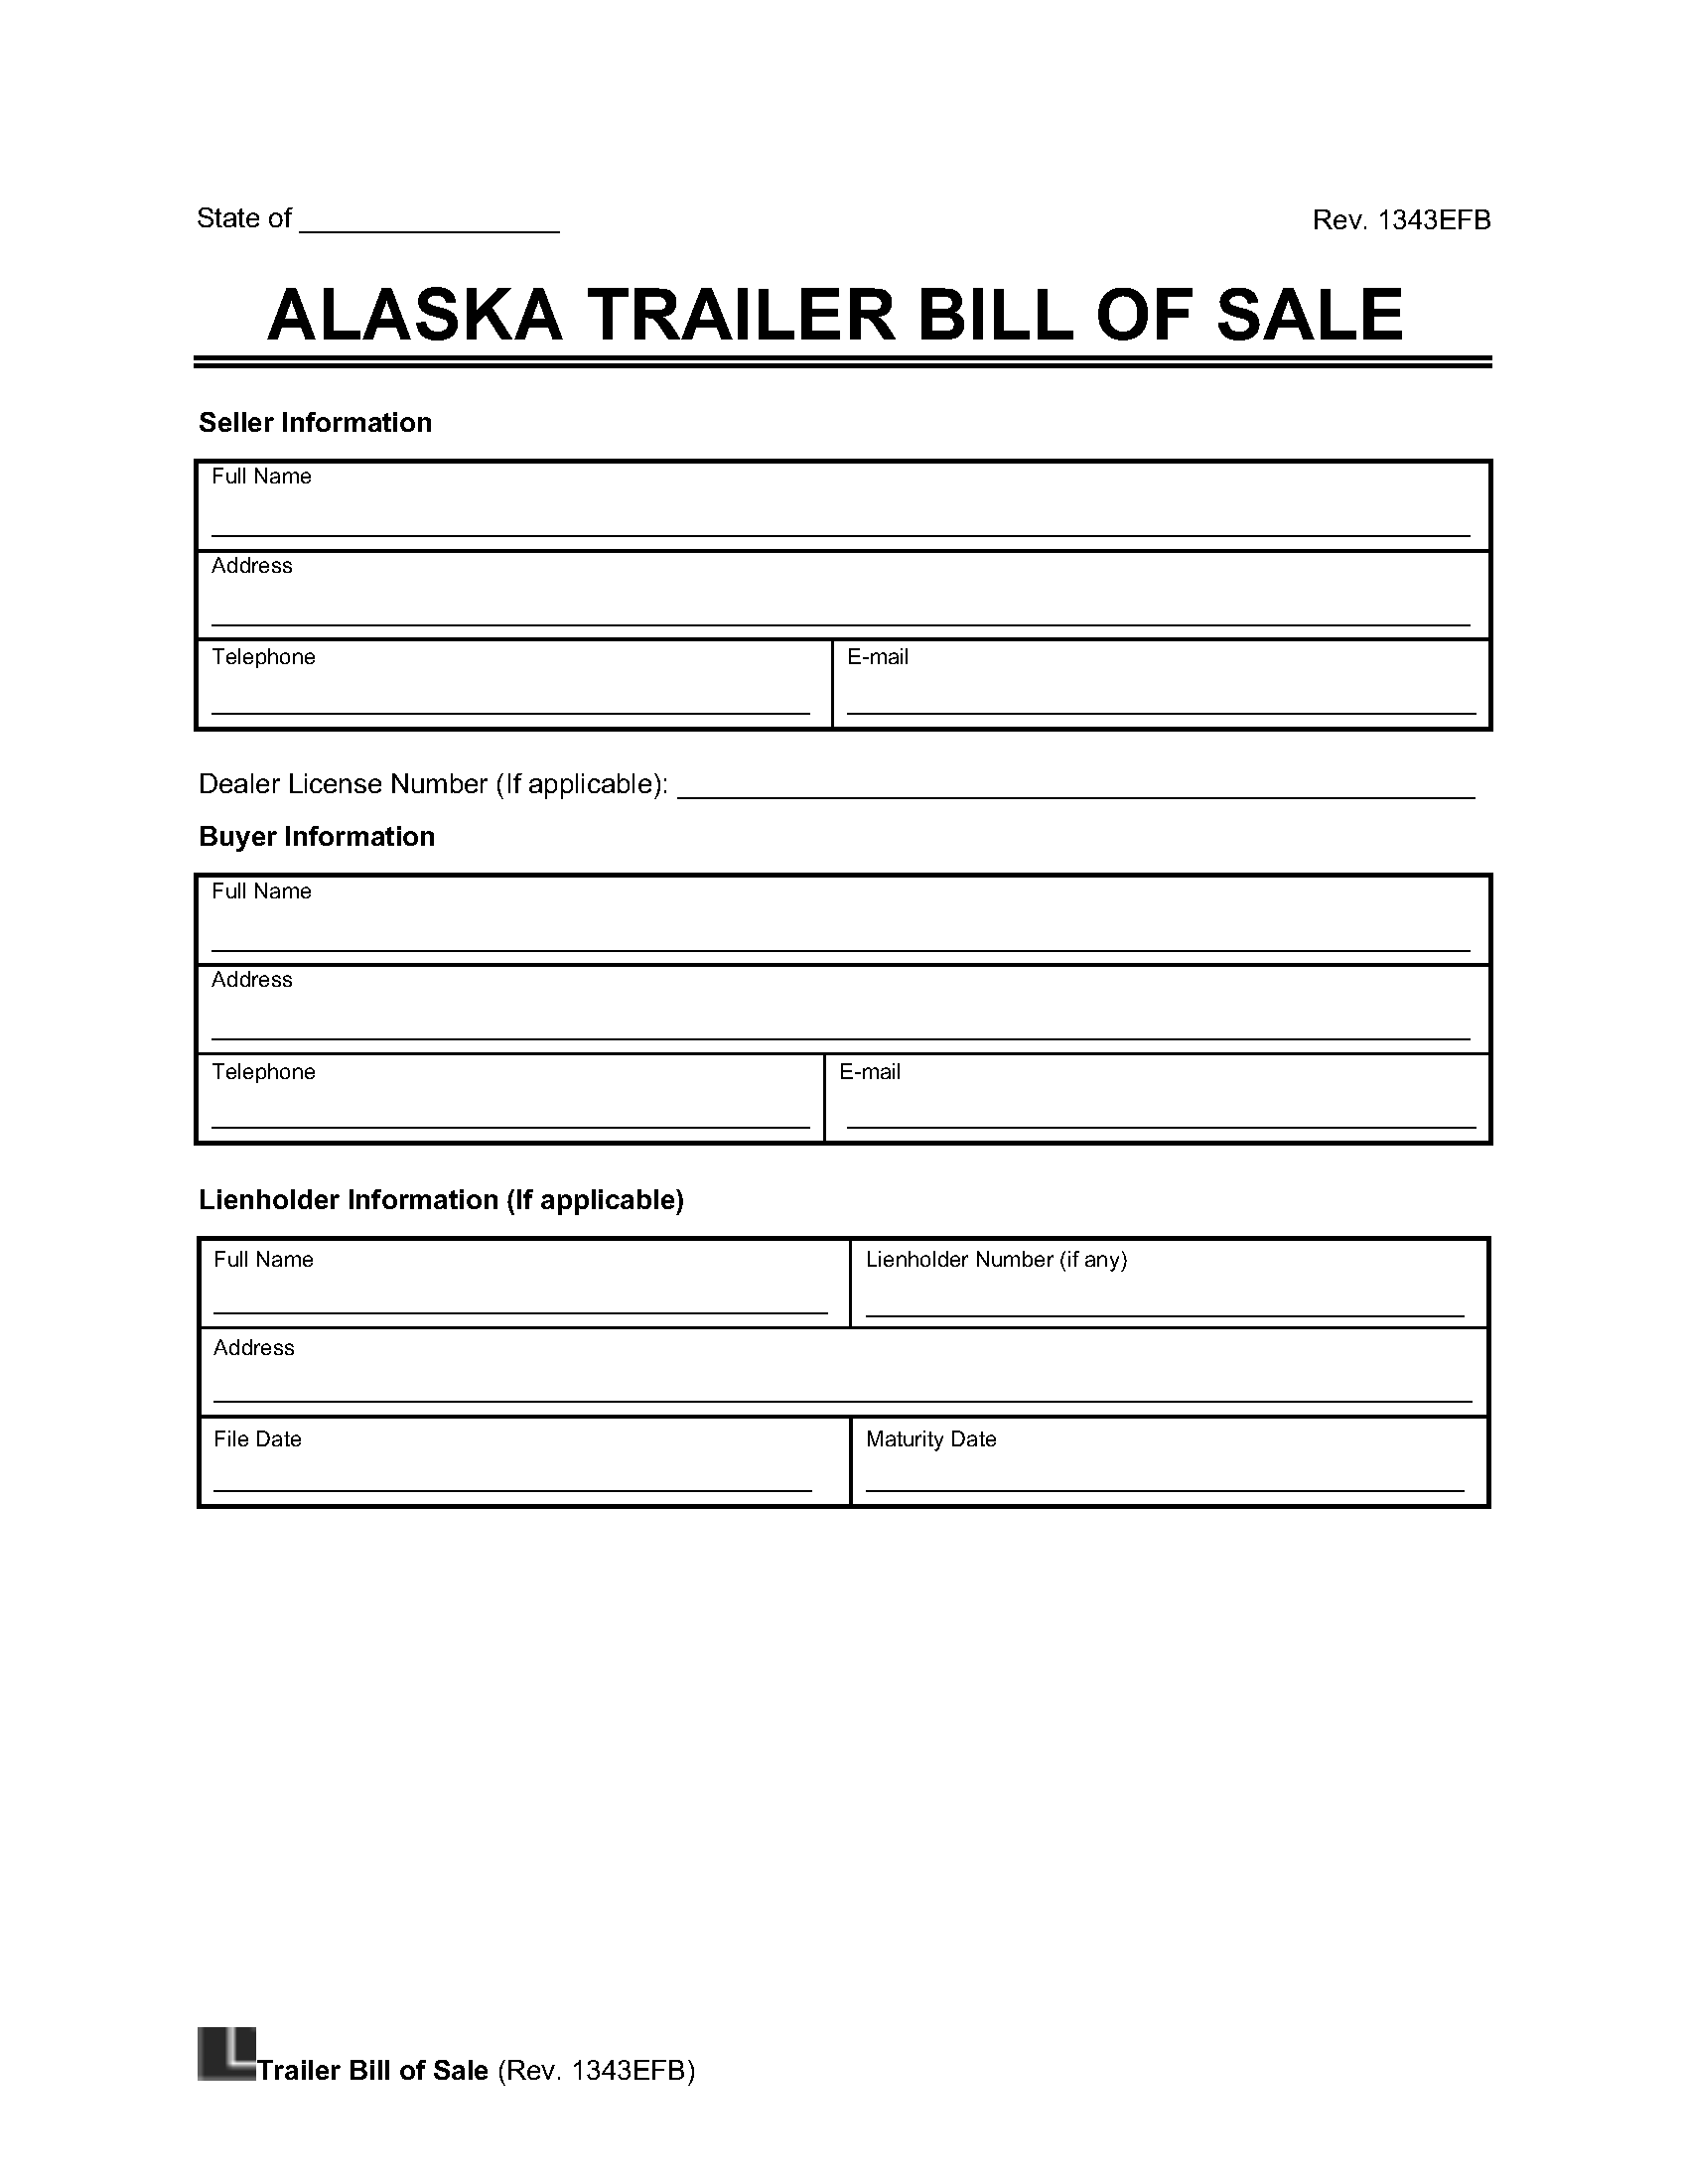 Alaska Trailer Bill of Sale screenshot
